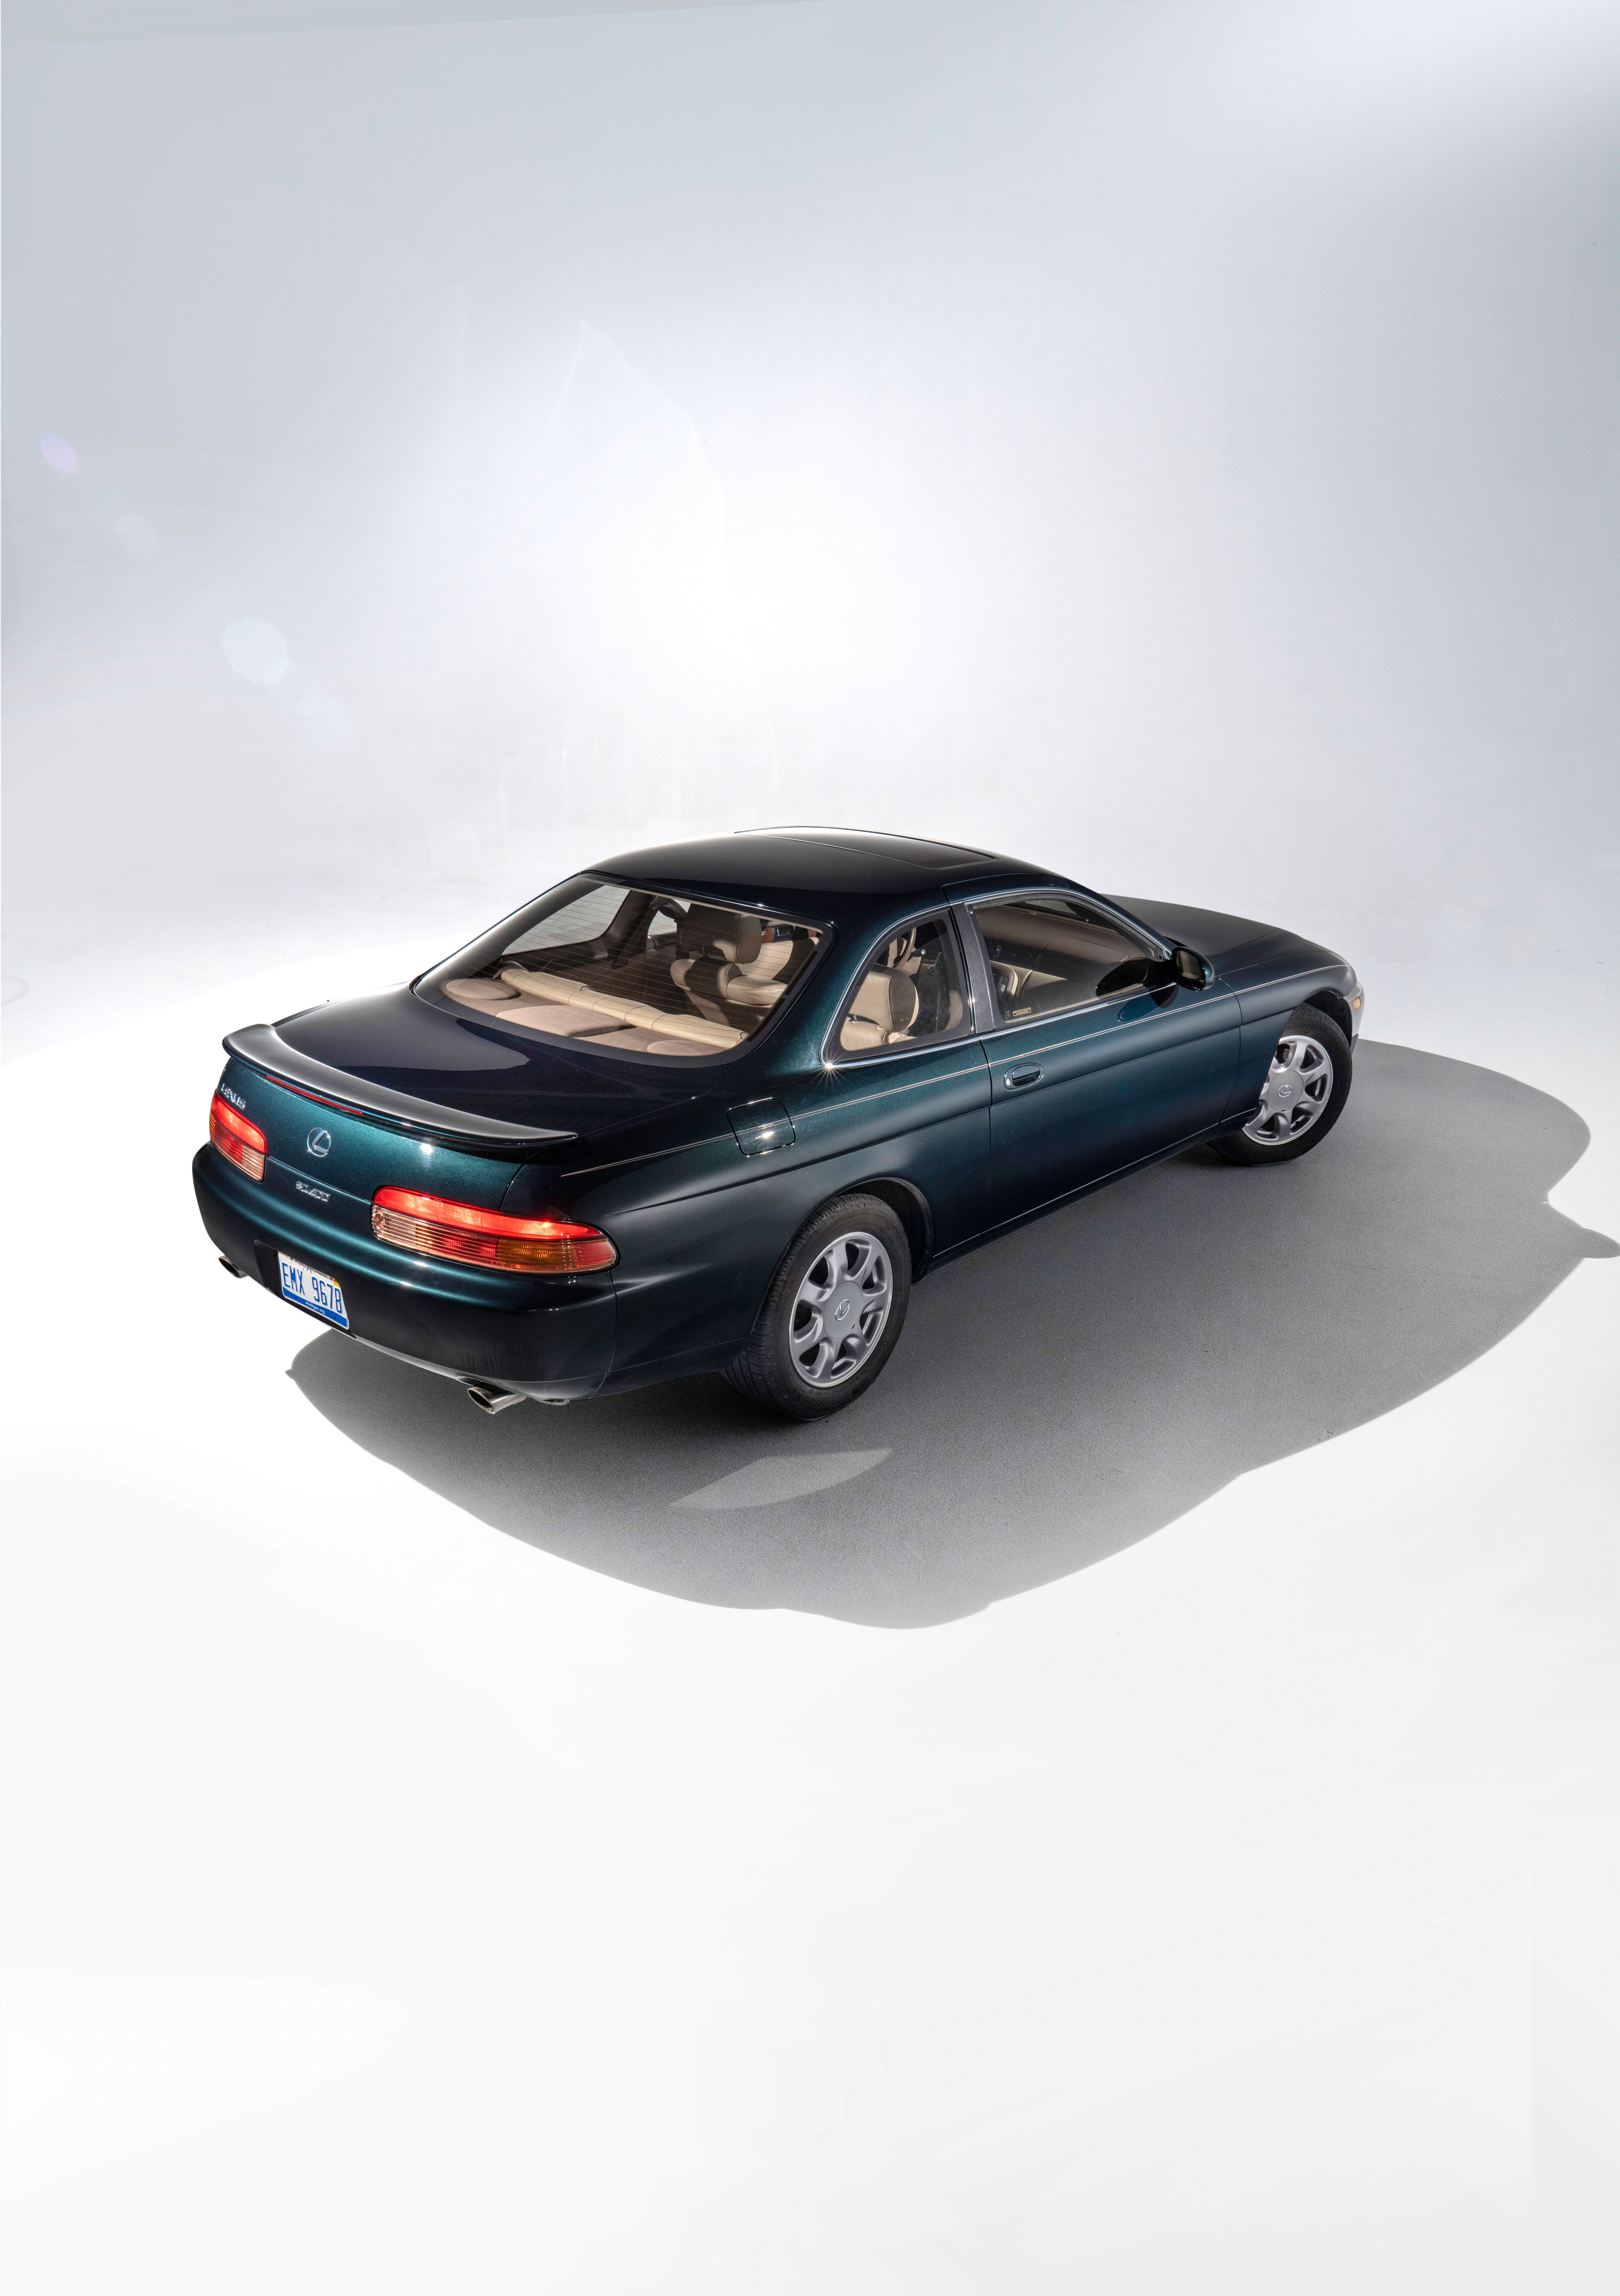 1998 Lexus SC 400 specifications, technical data, performance